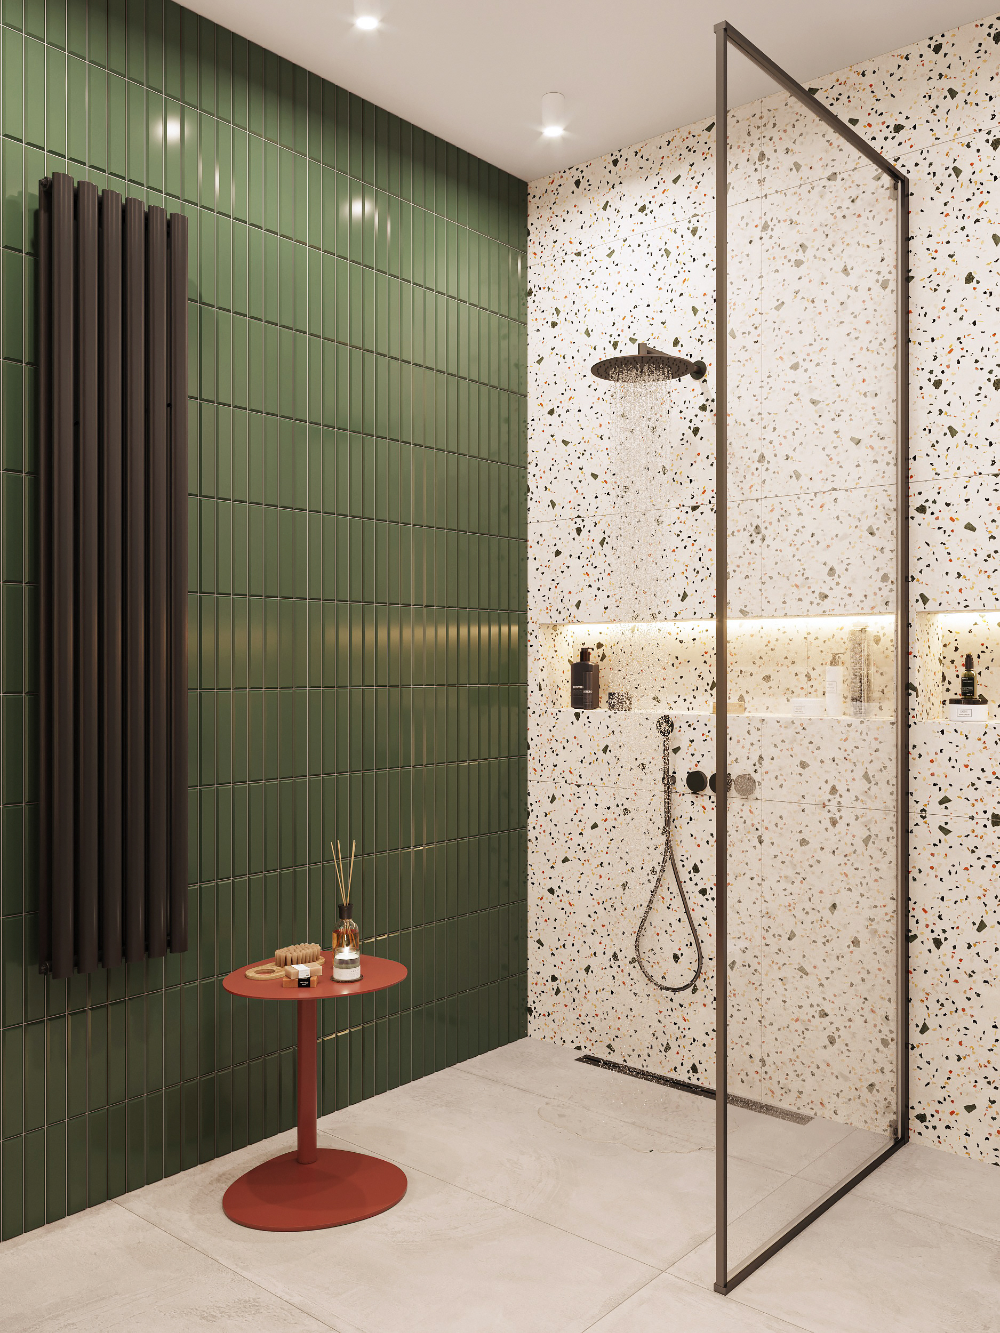 Bathroom Wall Tiles: Inspiring Designs for a Refreshing Retreat